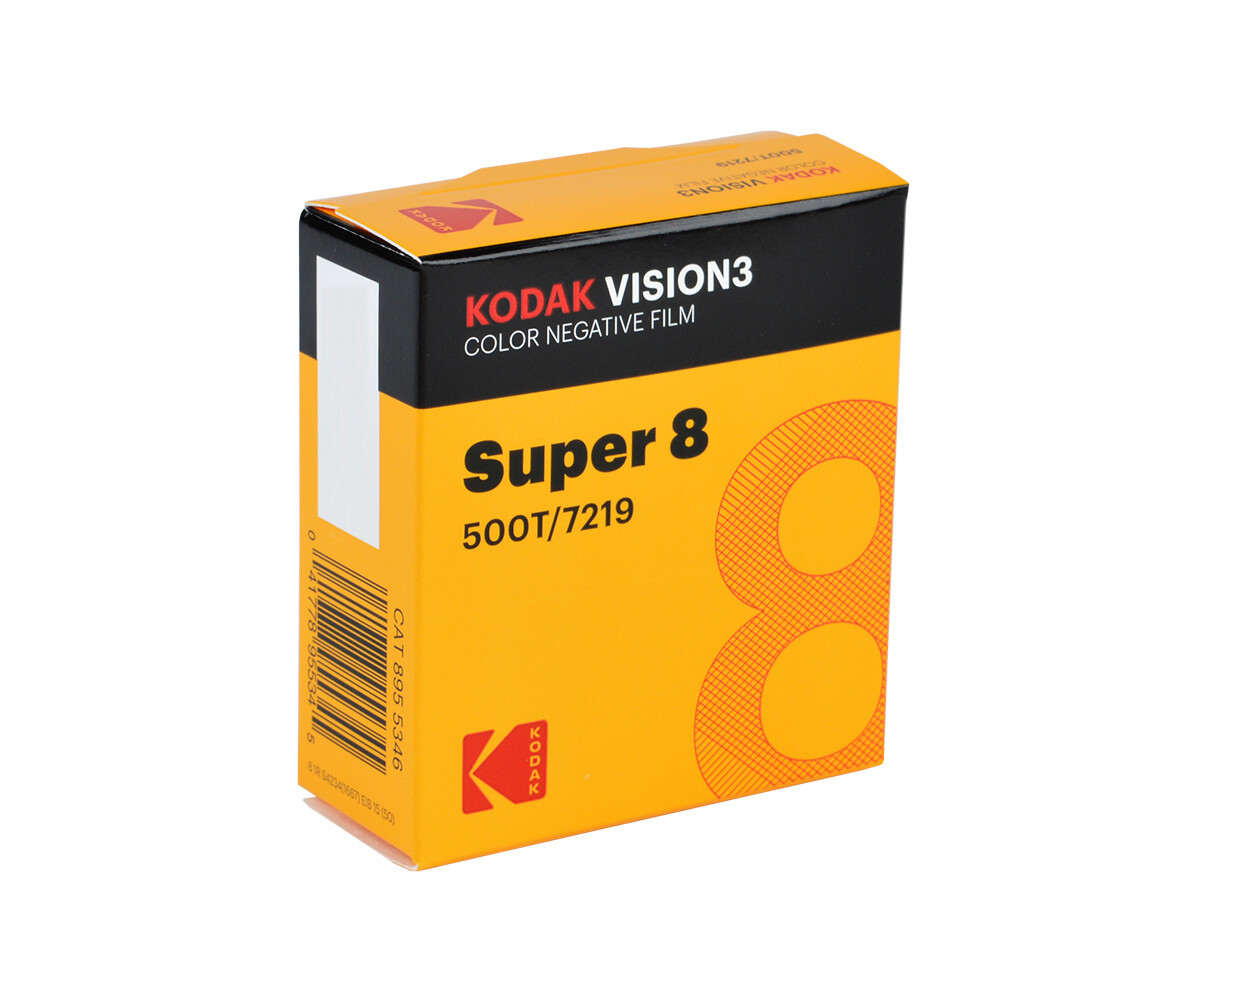 Kodak VISION3 500T Color Negative Film 7219 / Casette with Super 8, 50' Roll